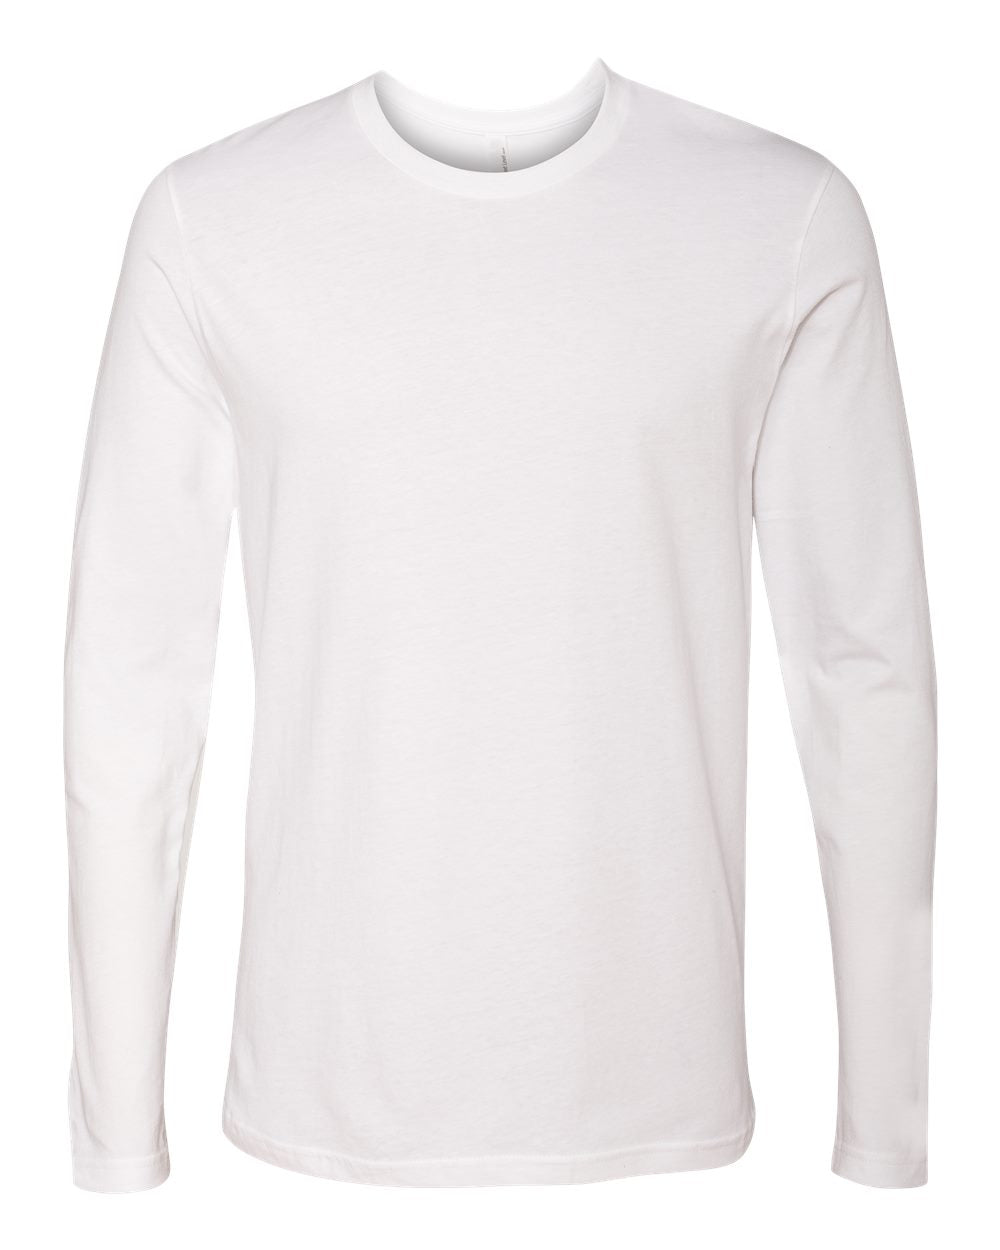 Next Level Cotton Long Sleeve T-Shirt